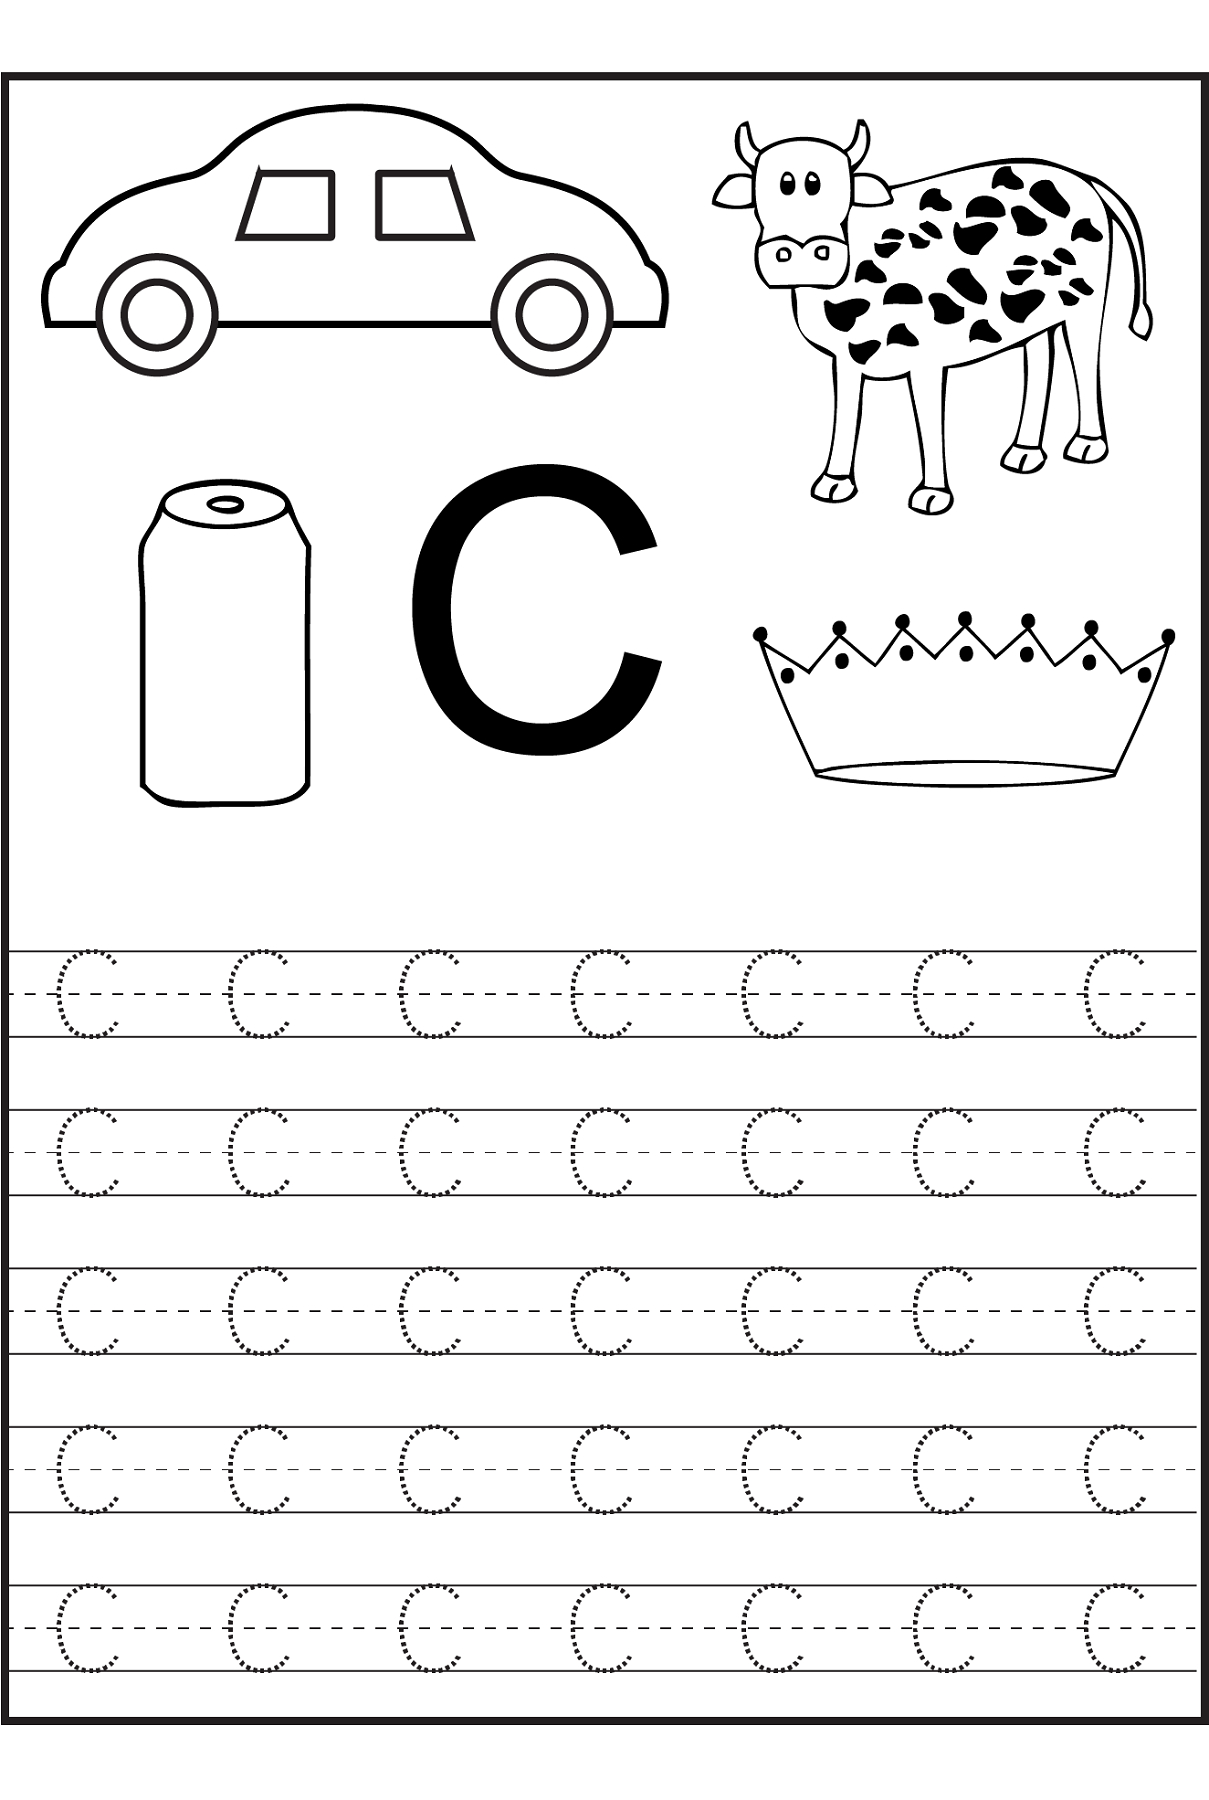 Letter C Tracing Worksheets For Preschoolers Awesome 82 Best with Tracing Letter C Worksheets